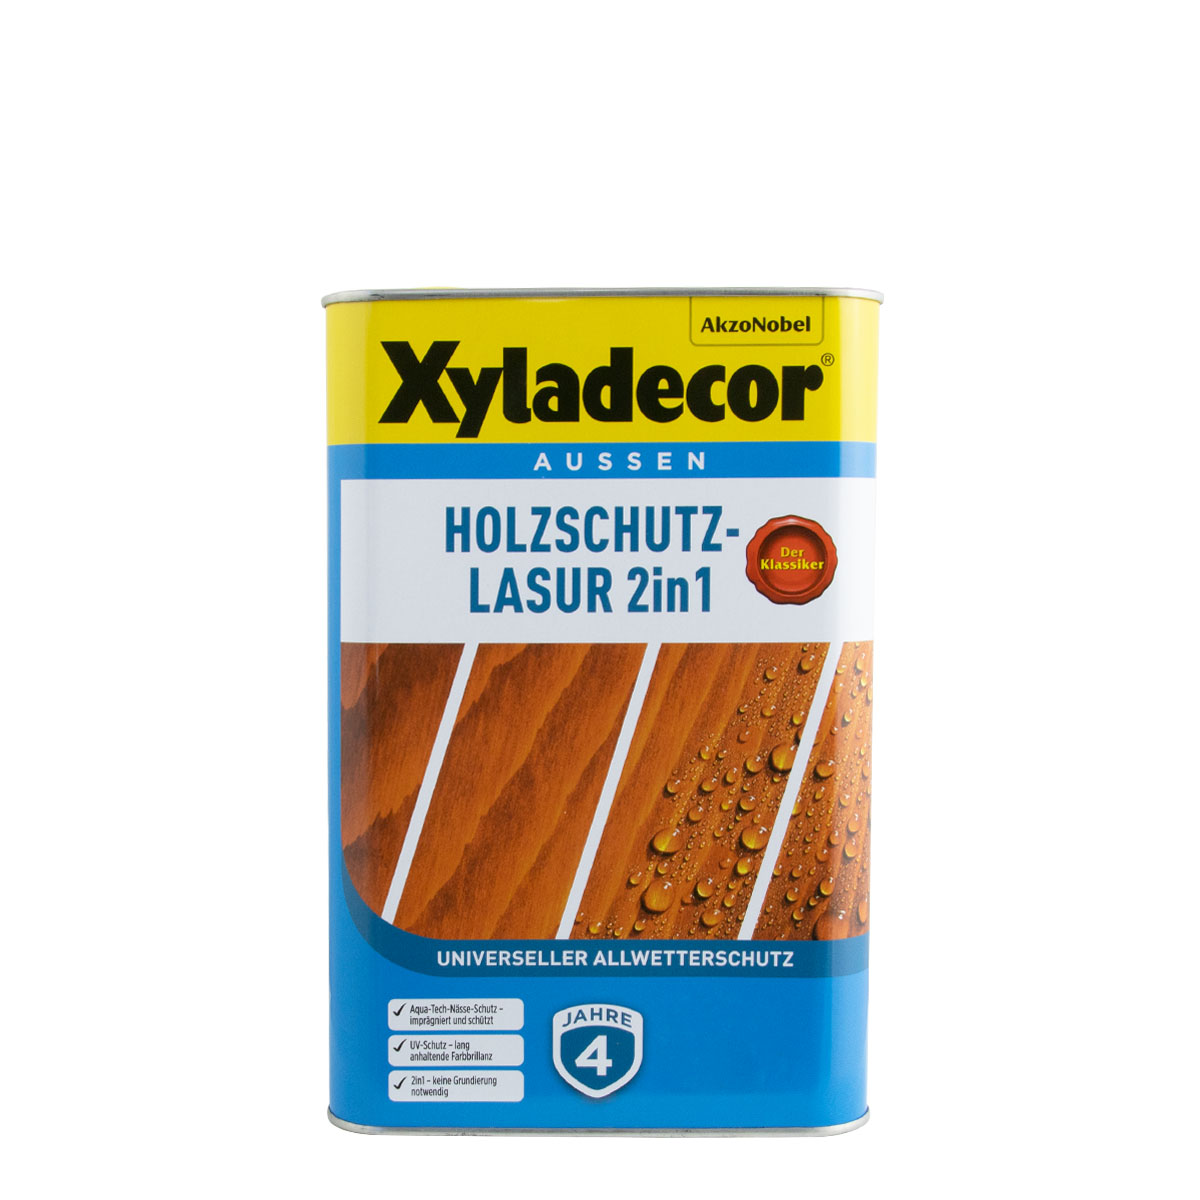 Xyladecor Holzschutz-Lasur 2in1 4L Nussbaum, Holzlasur